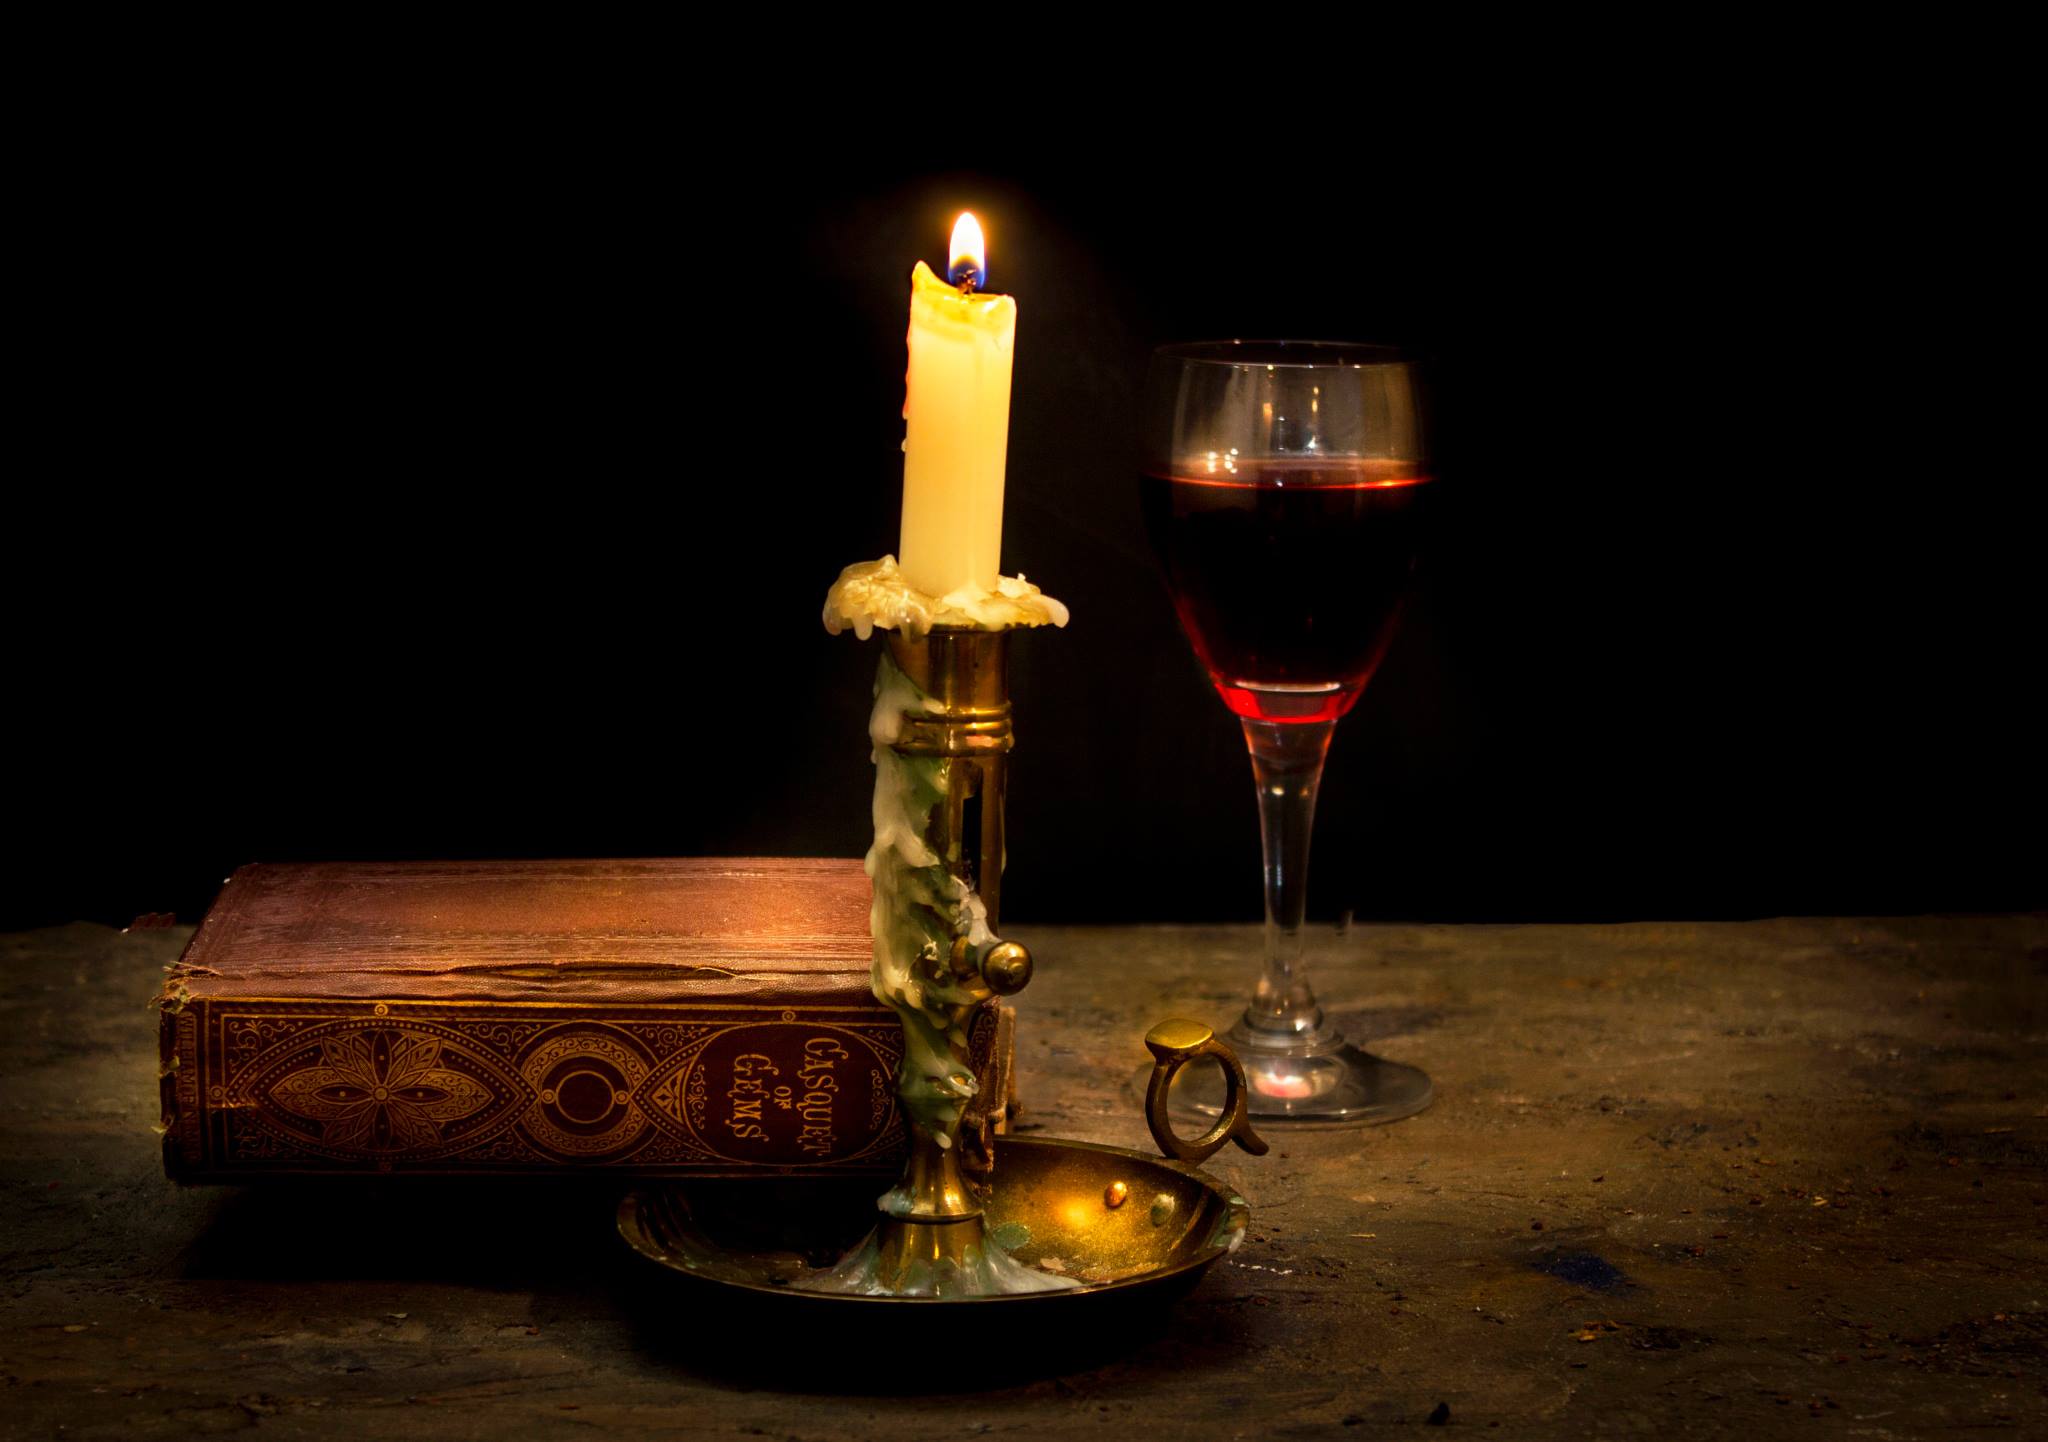 Песня на столе коньяк и свечи догорают. Натюрморт со свечой. Вино и свечи. Свеча на столе. Натюрморт с подсвечником.